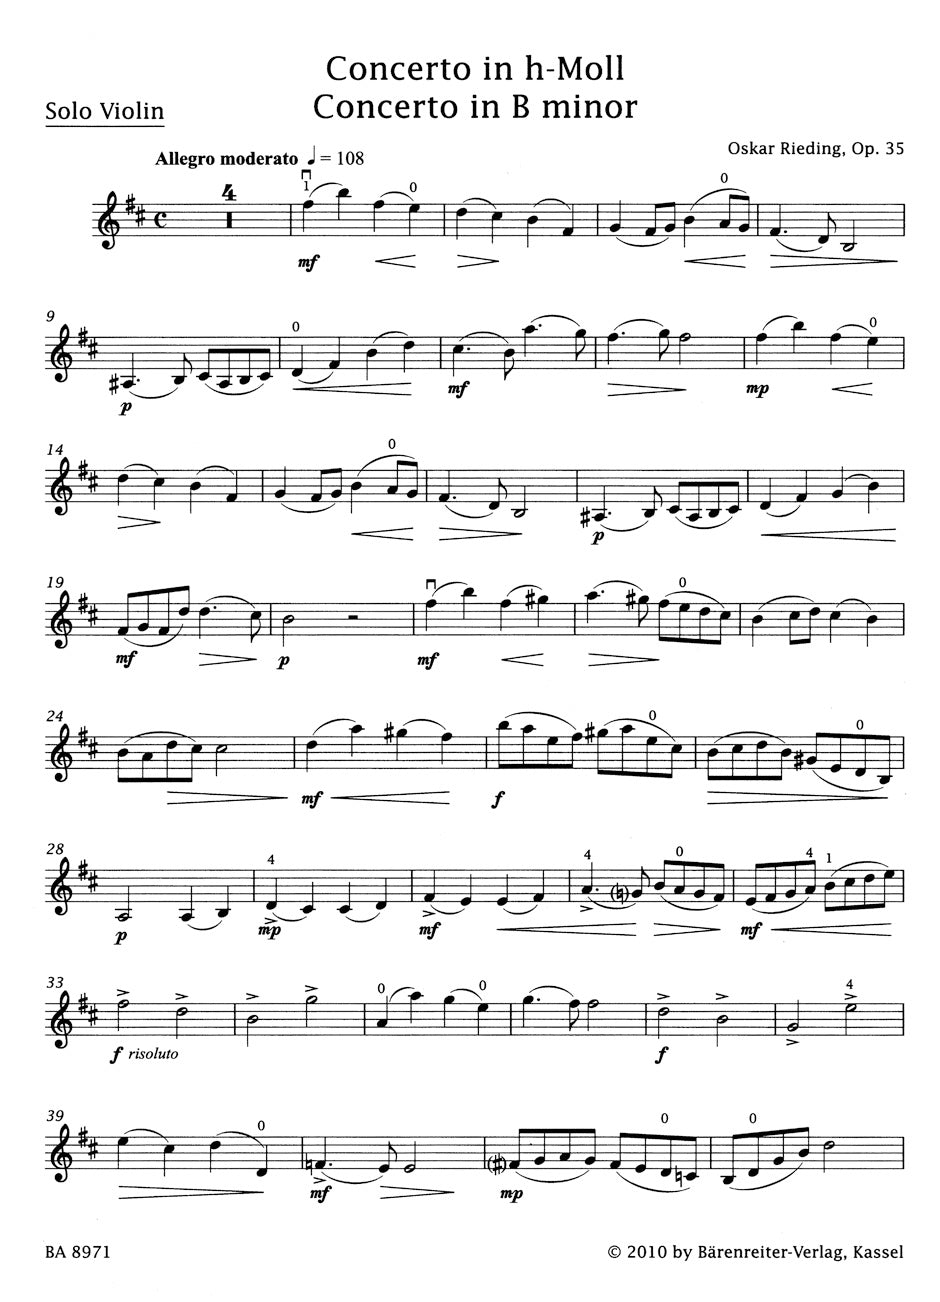 Rieding: Concerto in B Minor, 35 - Music